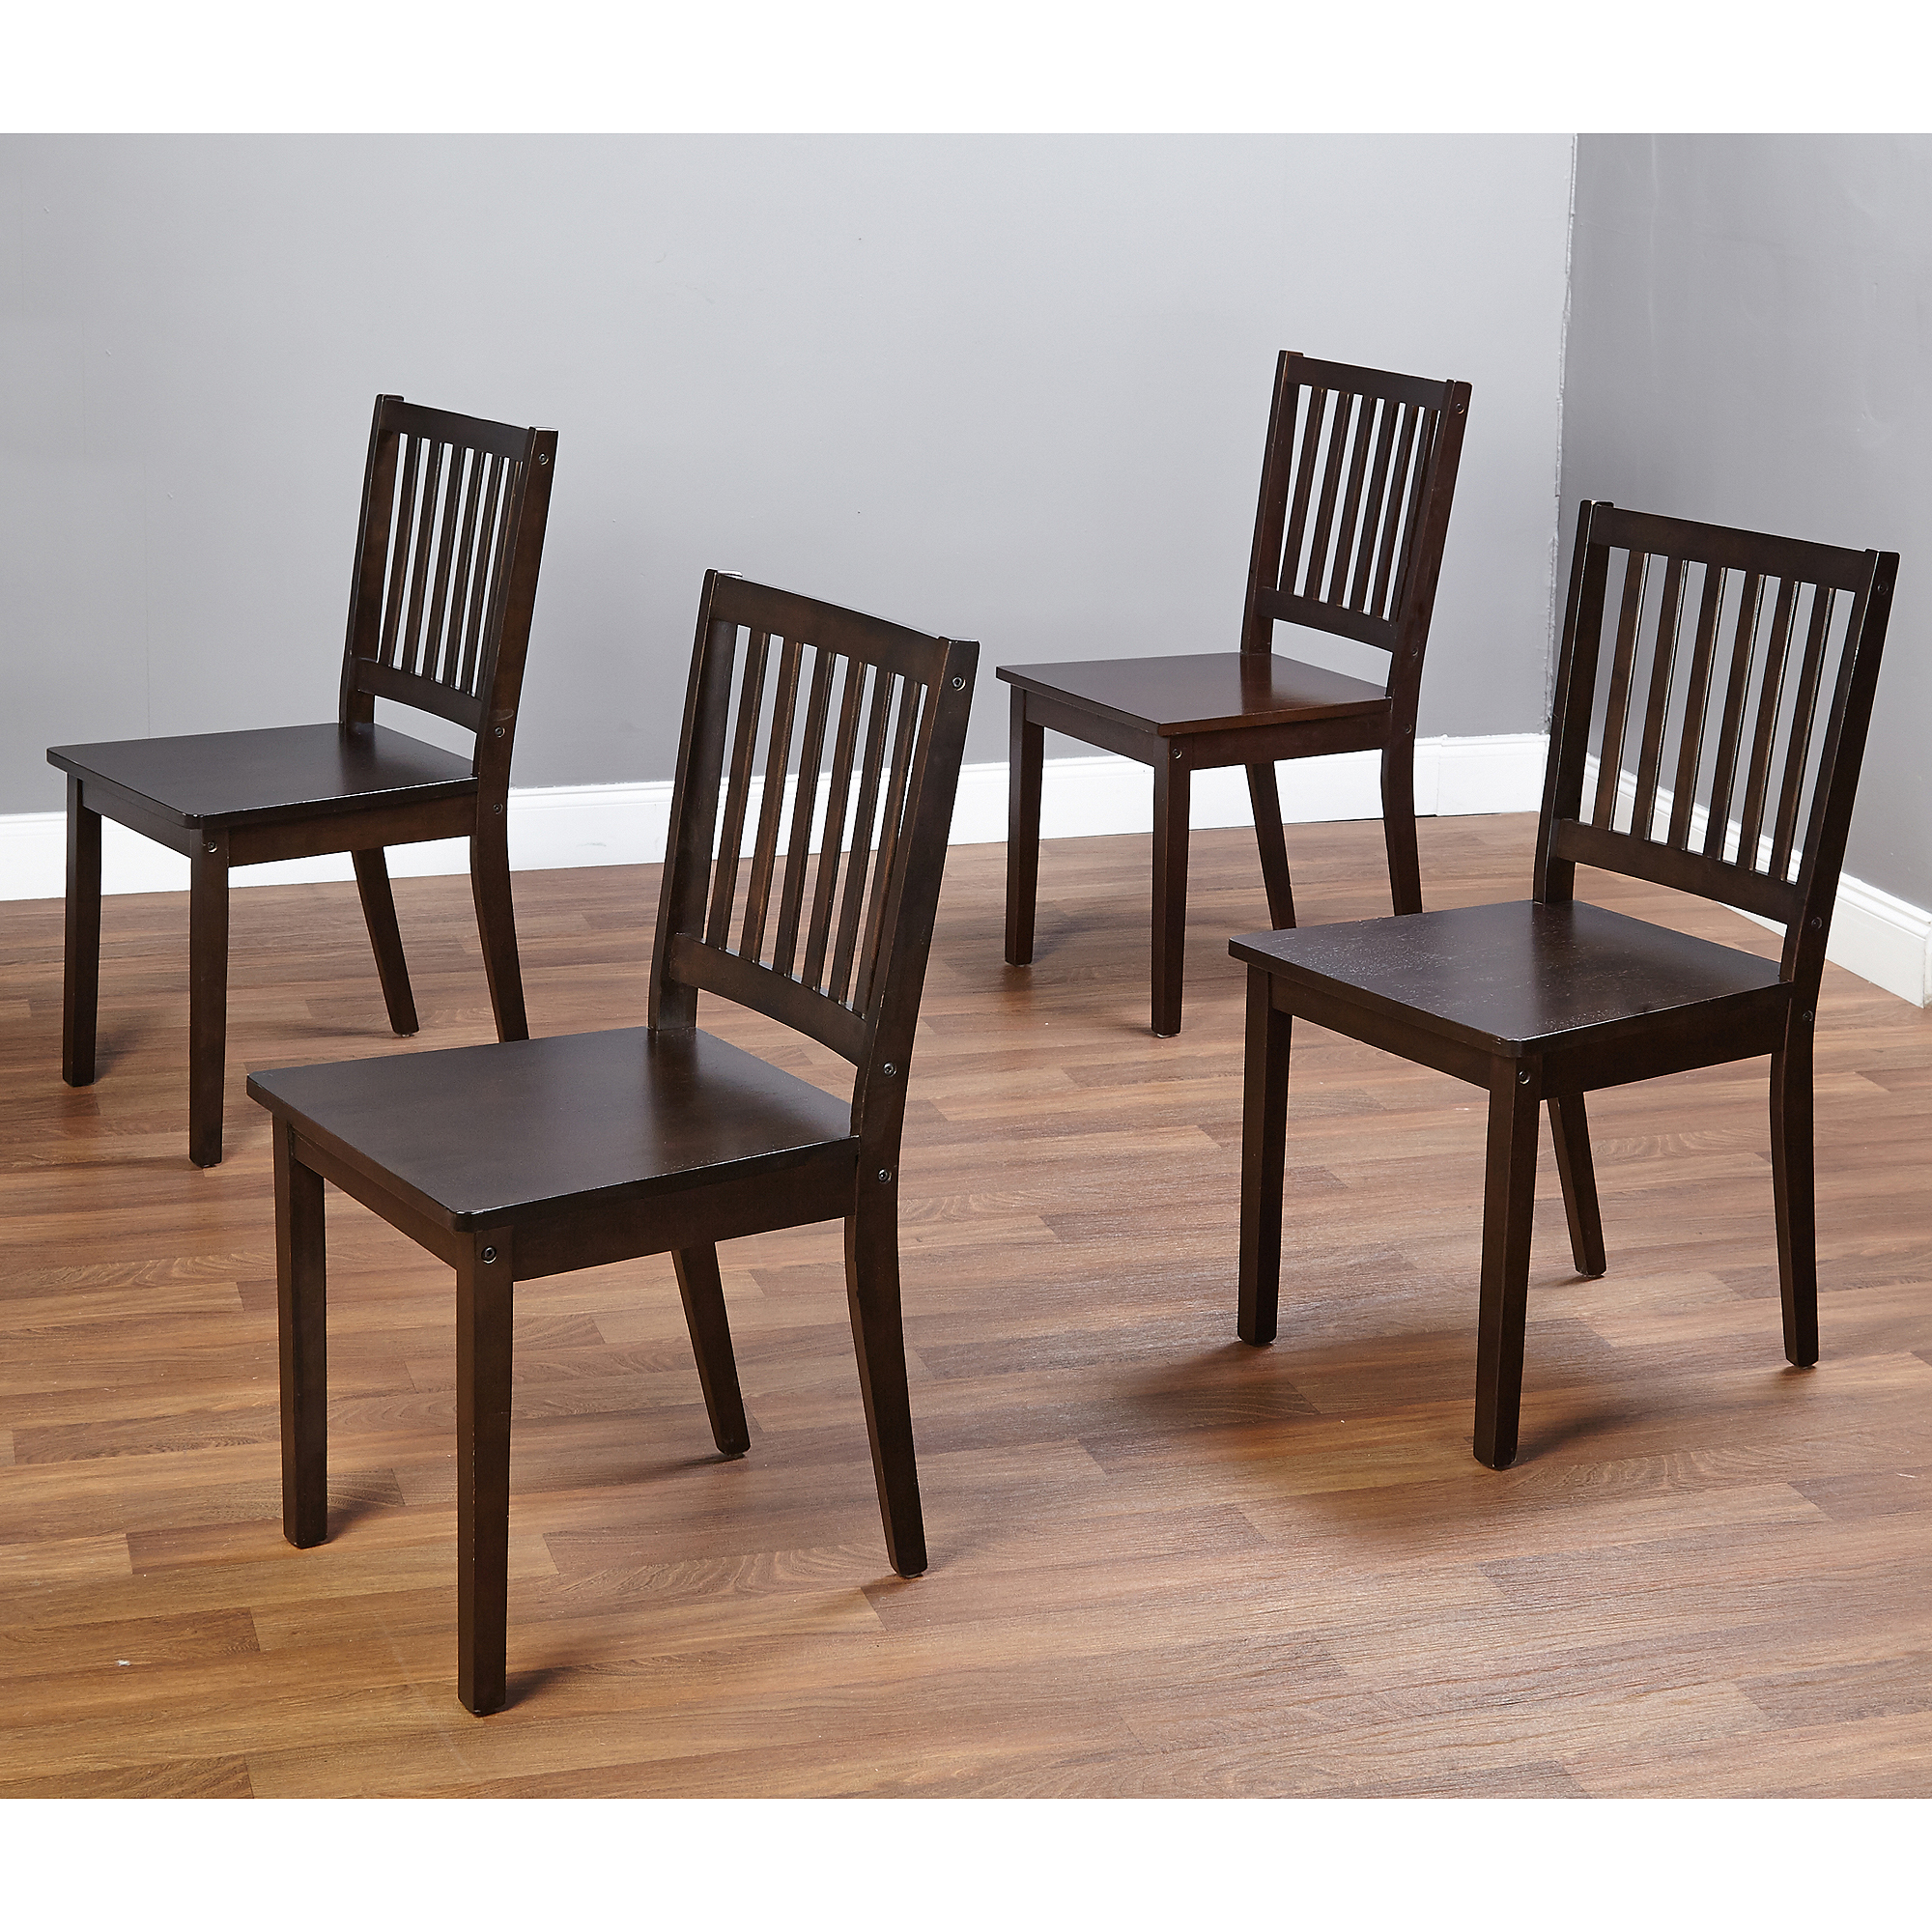 Shaker dining chairs, set of 4, espresso - walmart.com MTPKOUN